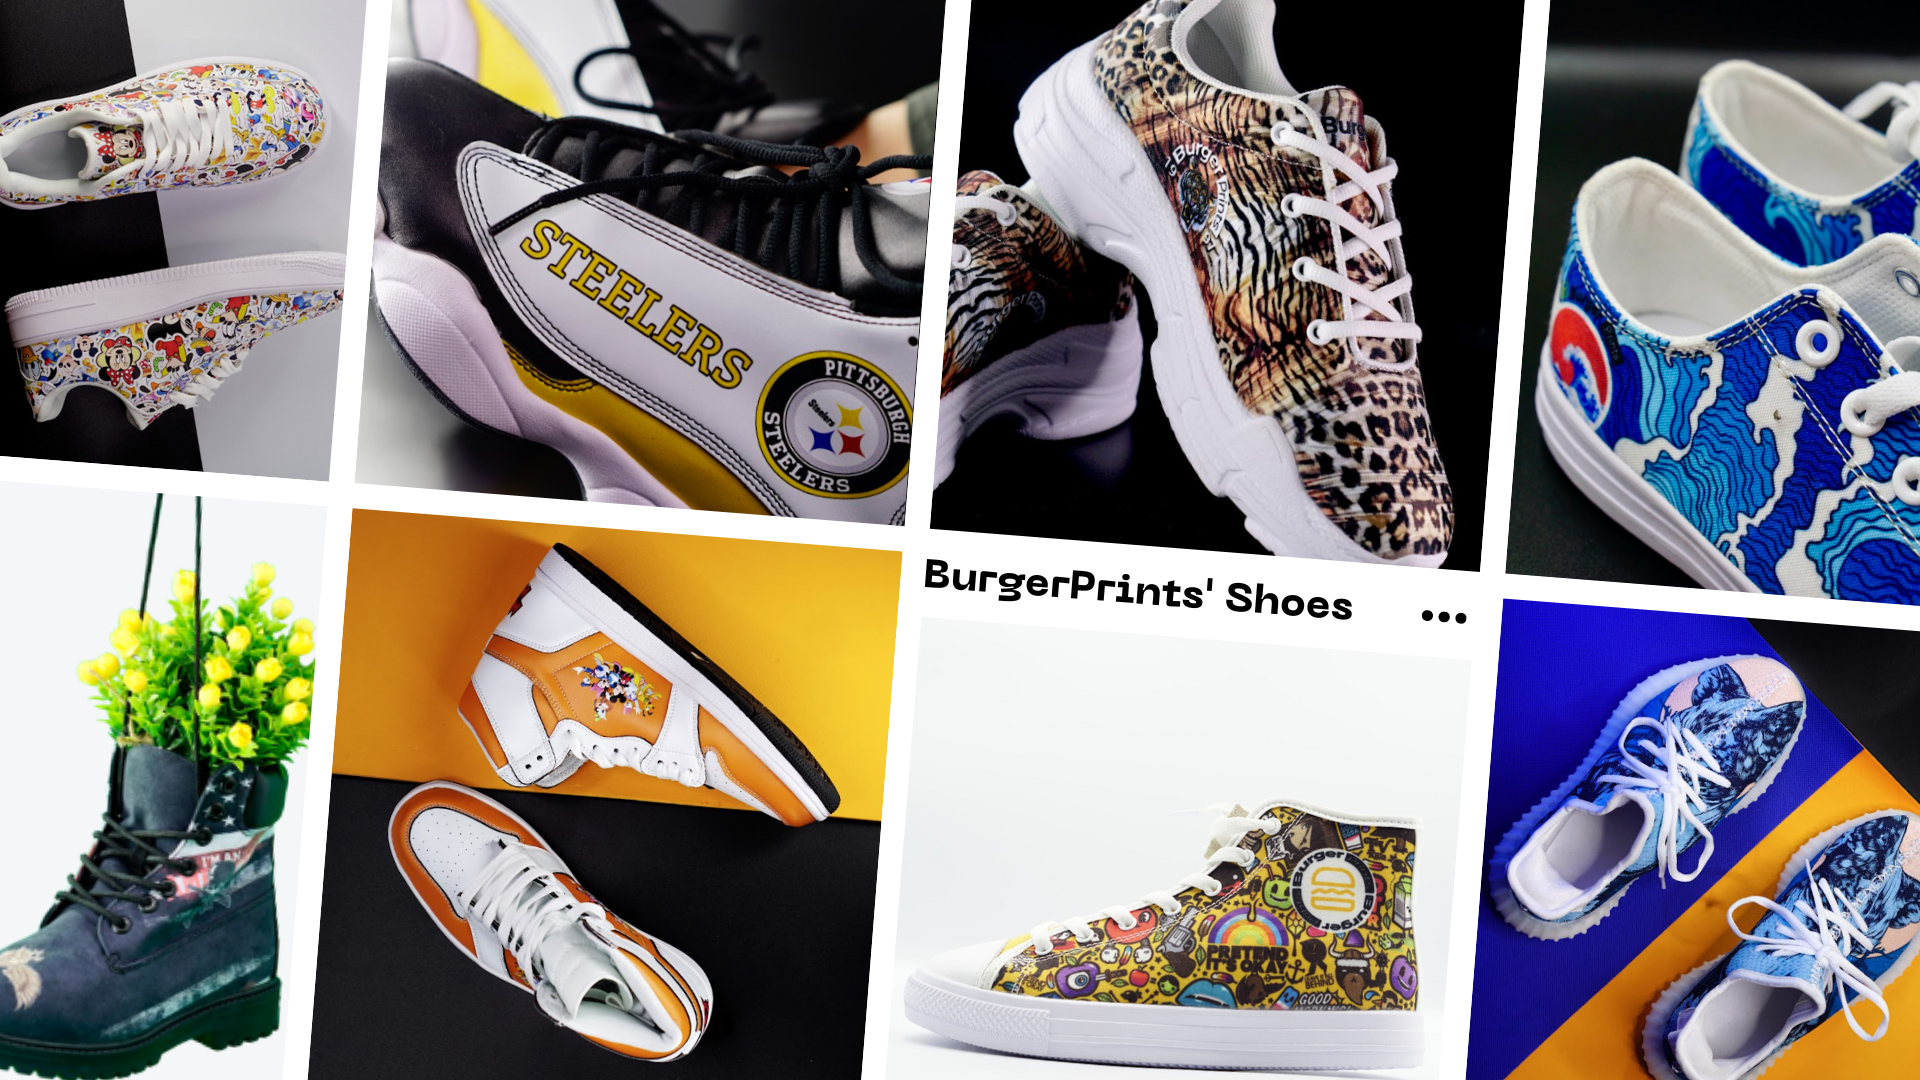 San-pham-ban-chay-tren-Etsy-2023-BurgerPrints-shoes